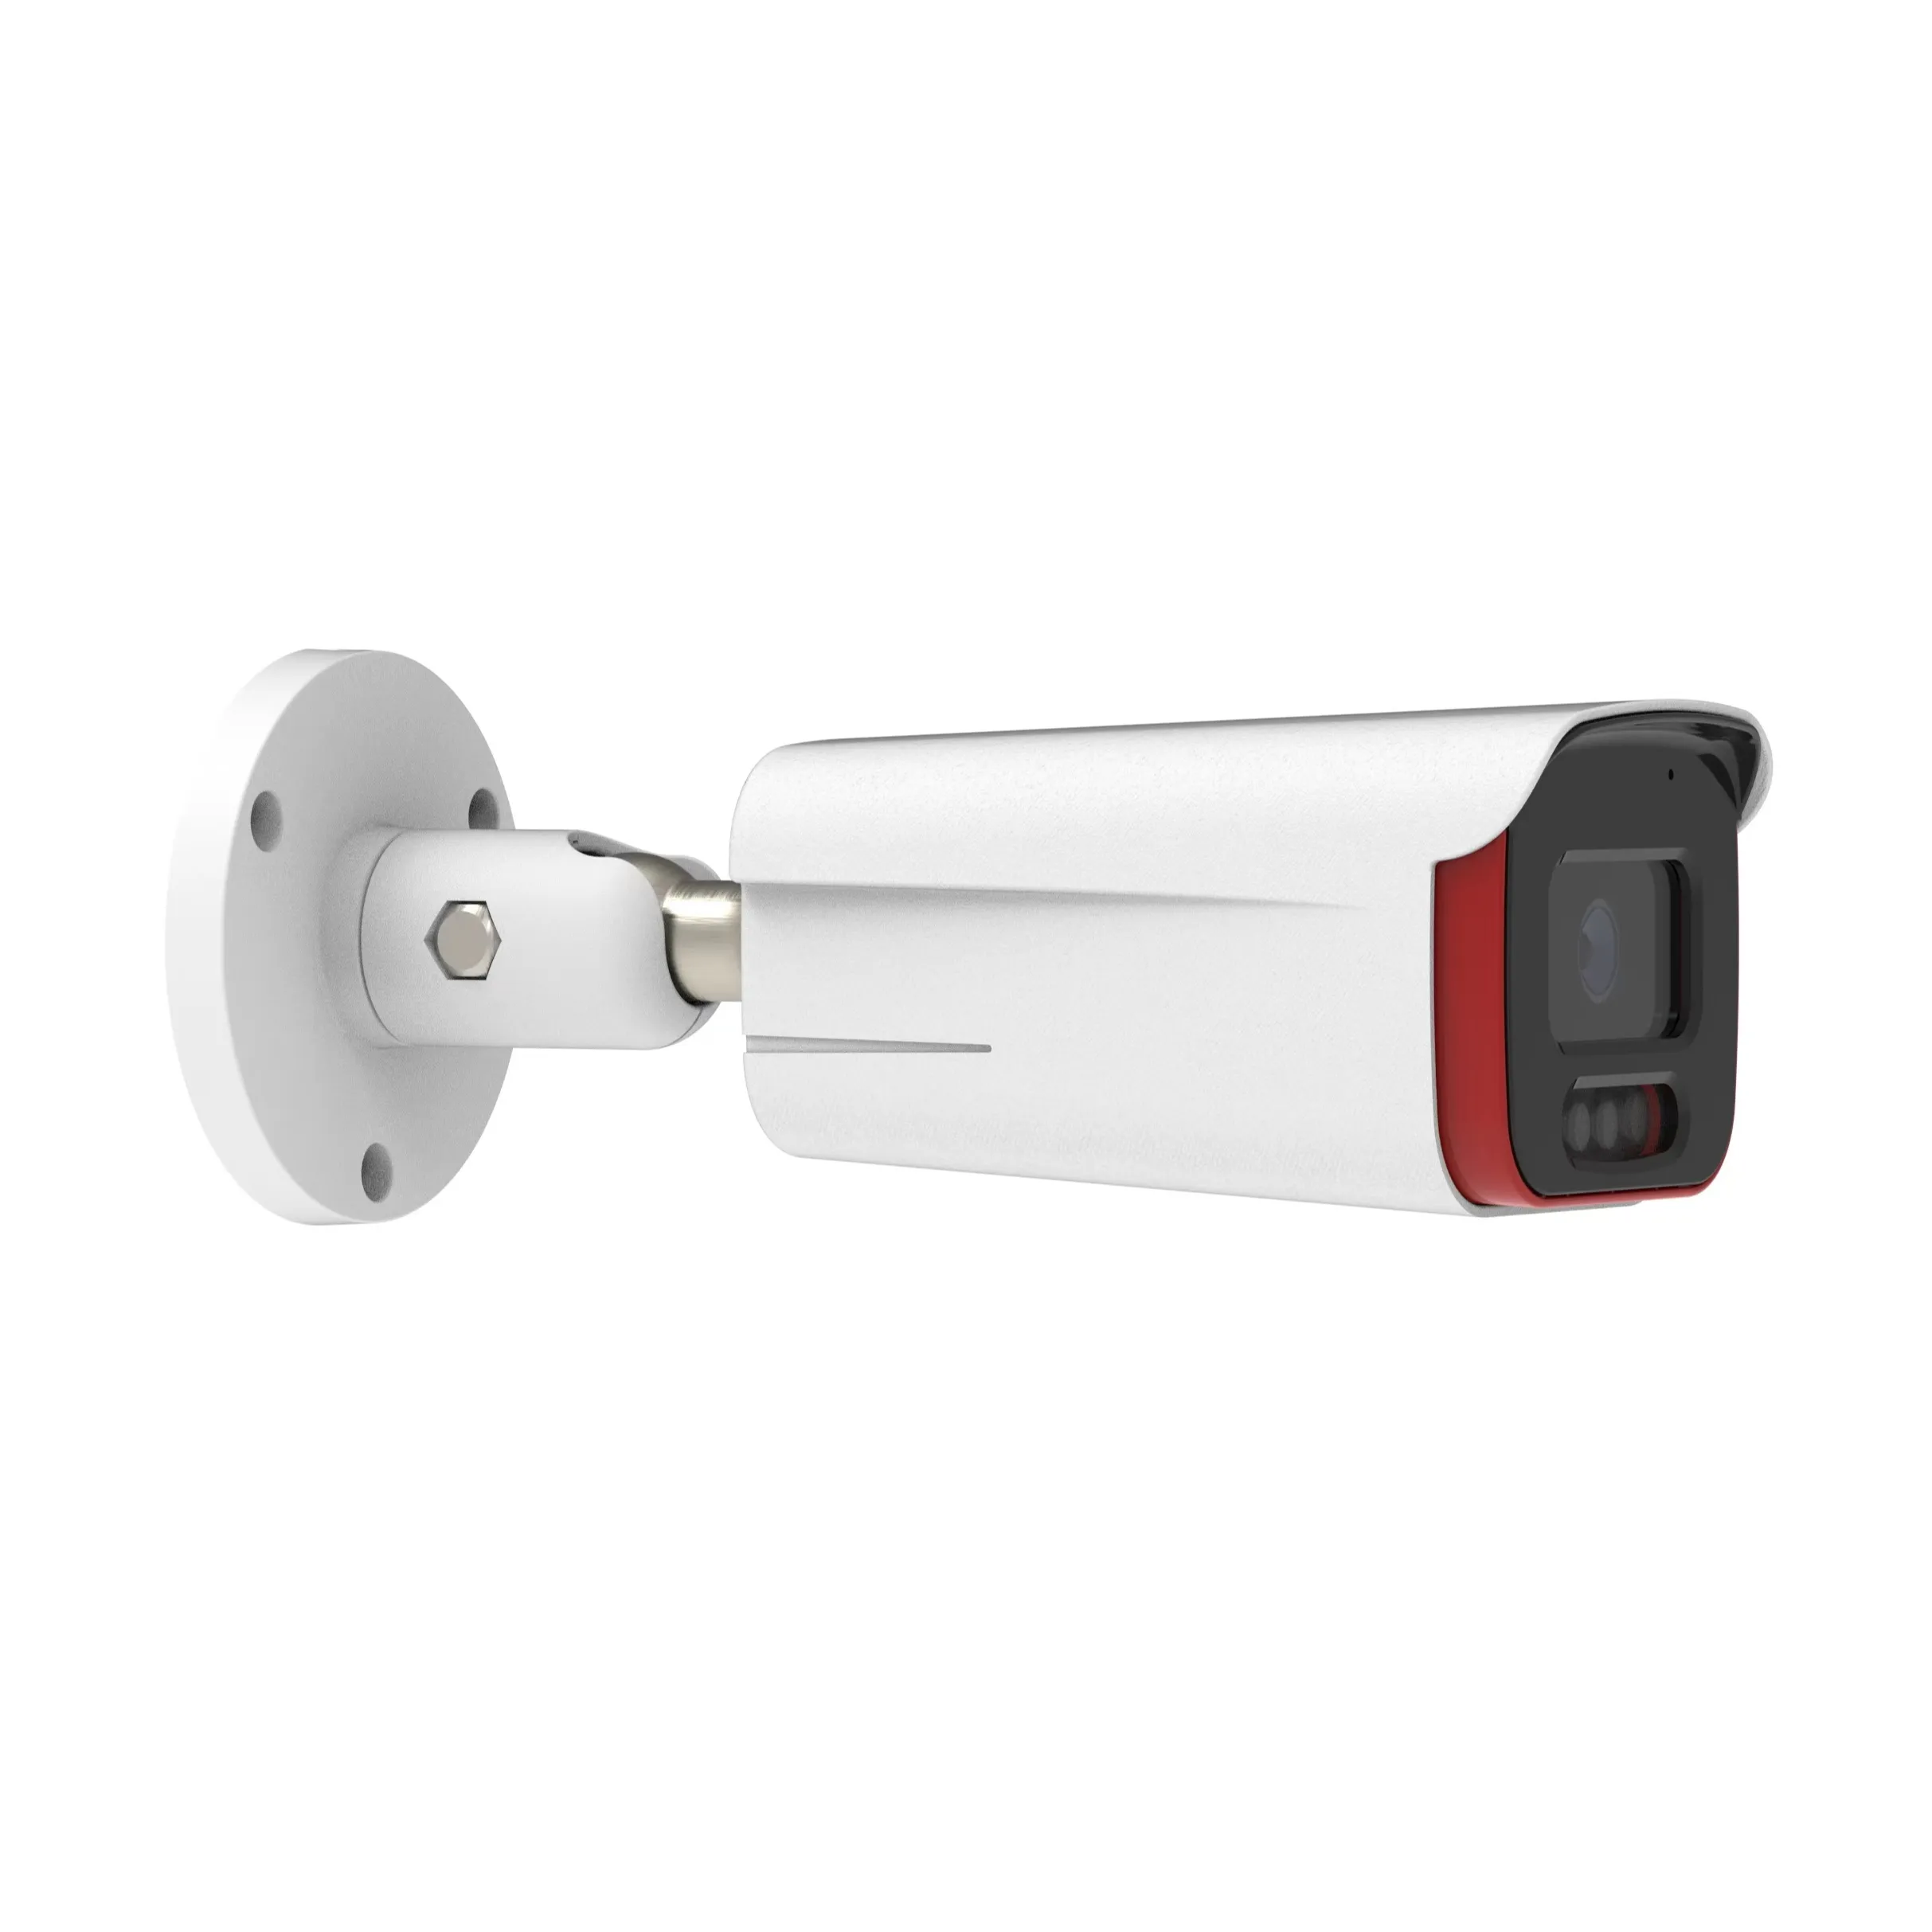 Waterproof Aluminum Bullet IP67 IP66 Outdoor Security IP AHD CCTV Camera Housing Case Casing Enclosure Surveillance Accessories